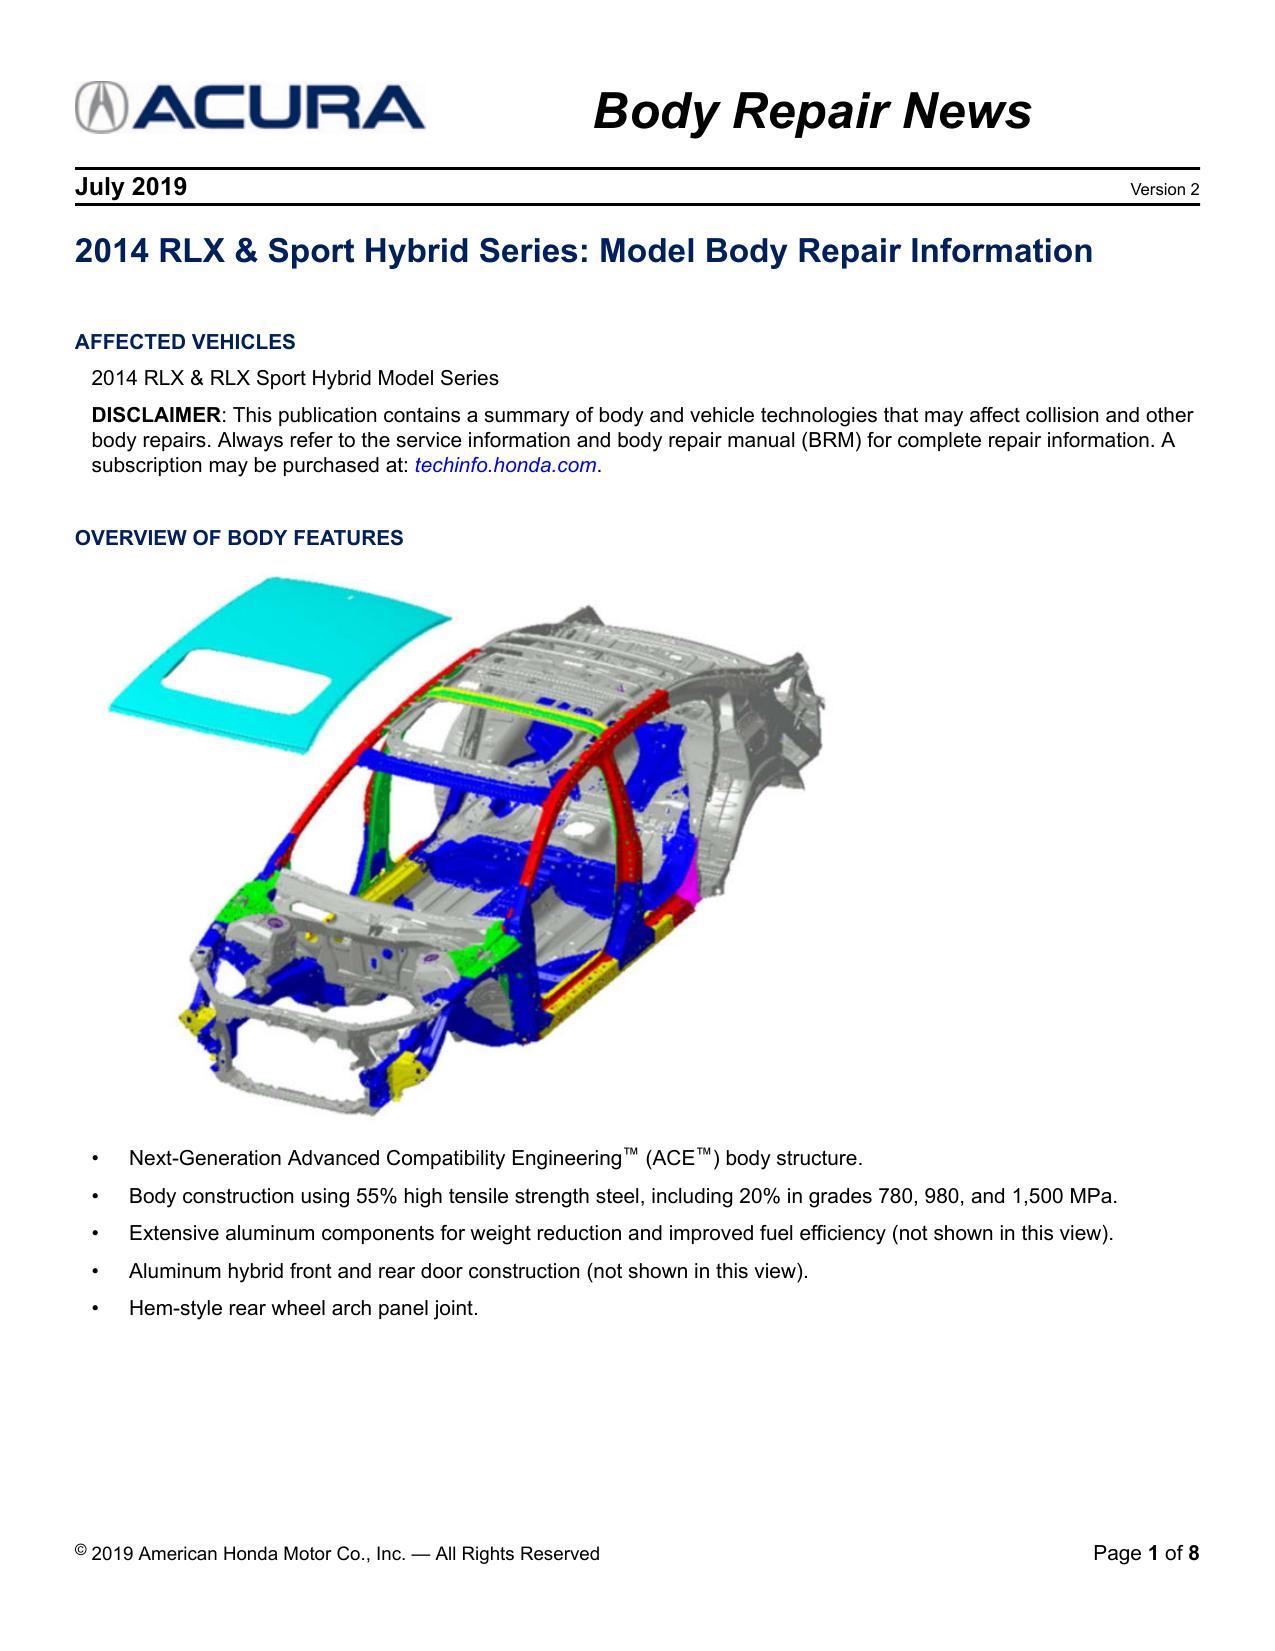 2014-rlx-sport-hybrid-series-body-repair-manual.pdf